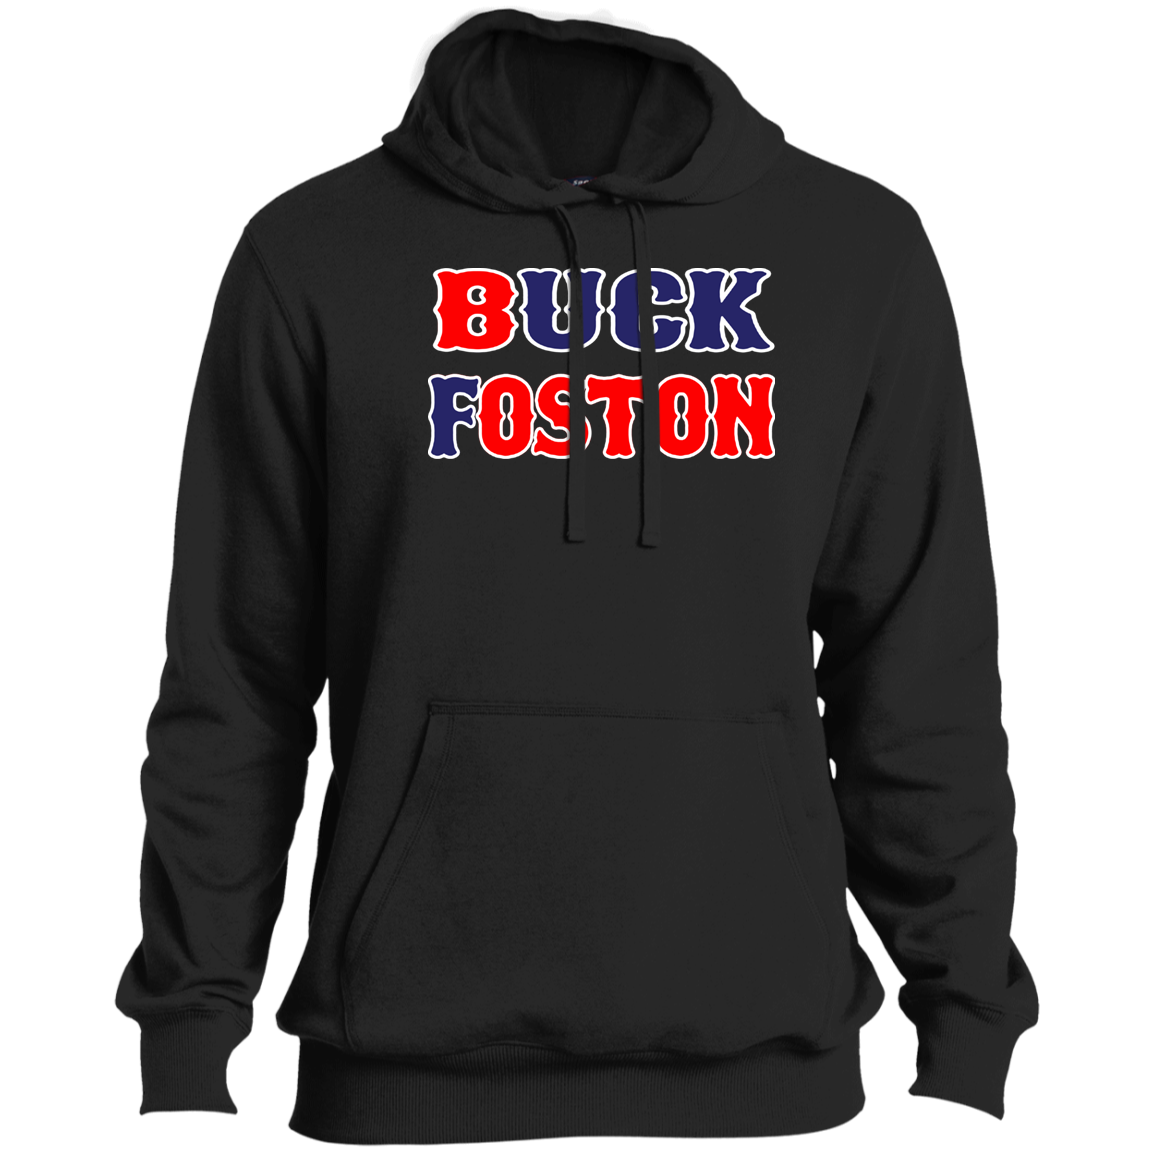 ArtichokeUSA Custom Design. BUCK FOSTON. Tall Pullover Hoodie